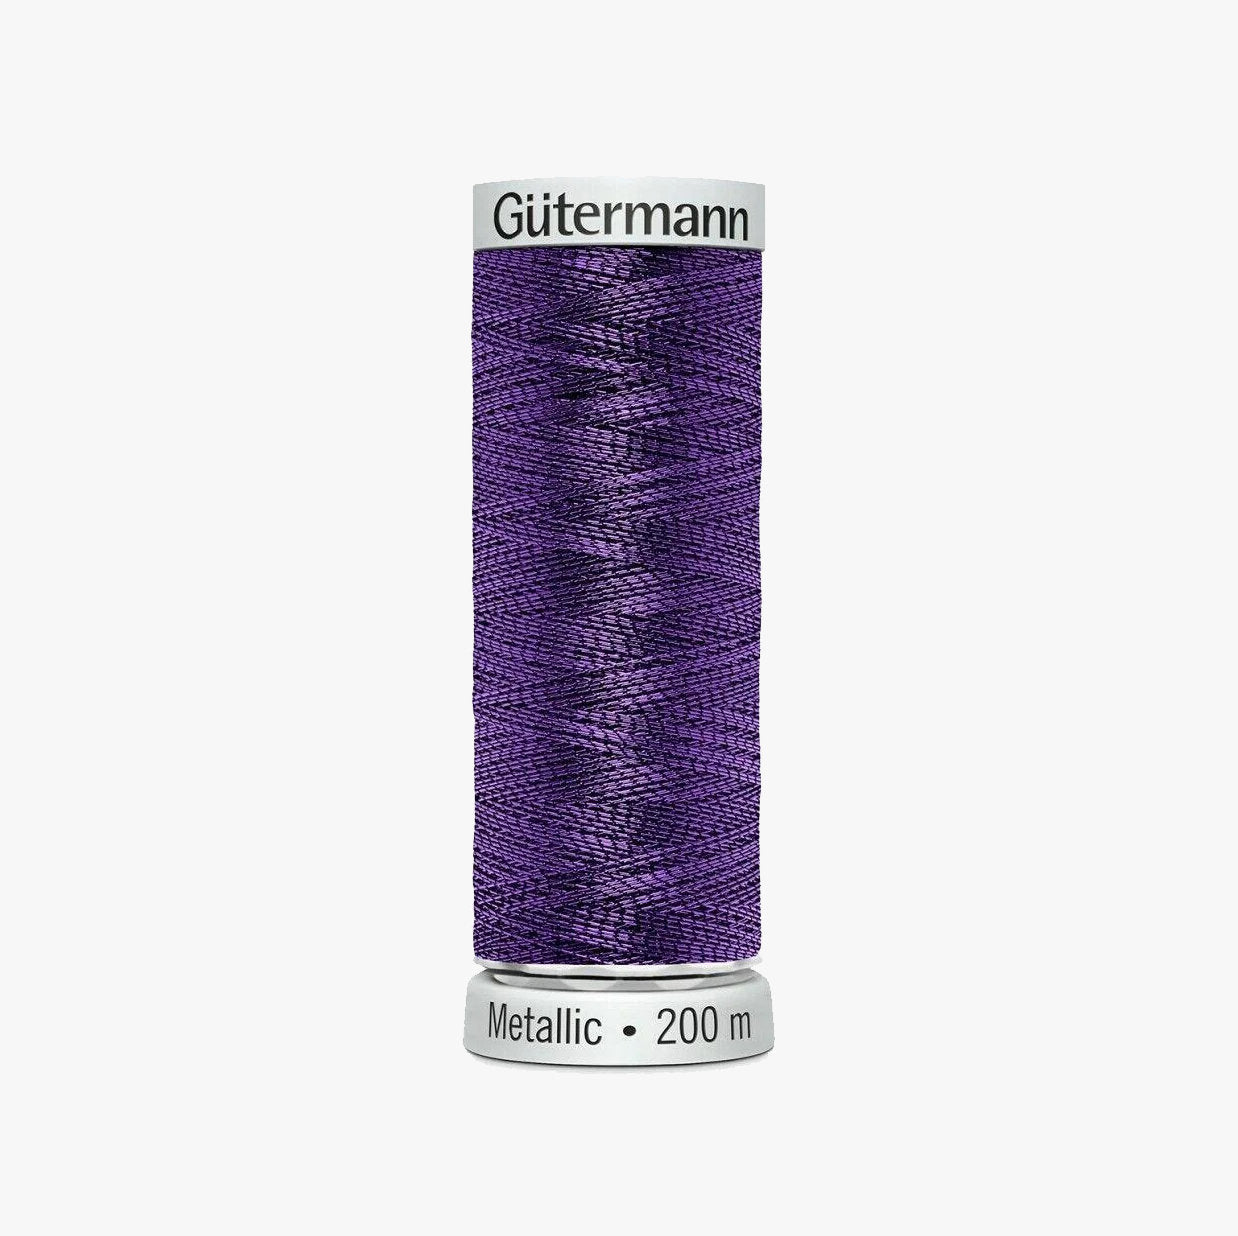 7050 Gutermann Metallic Thread 200m - Metallic Effect for Decorative Seams and Machine Embroidery